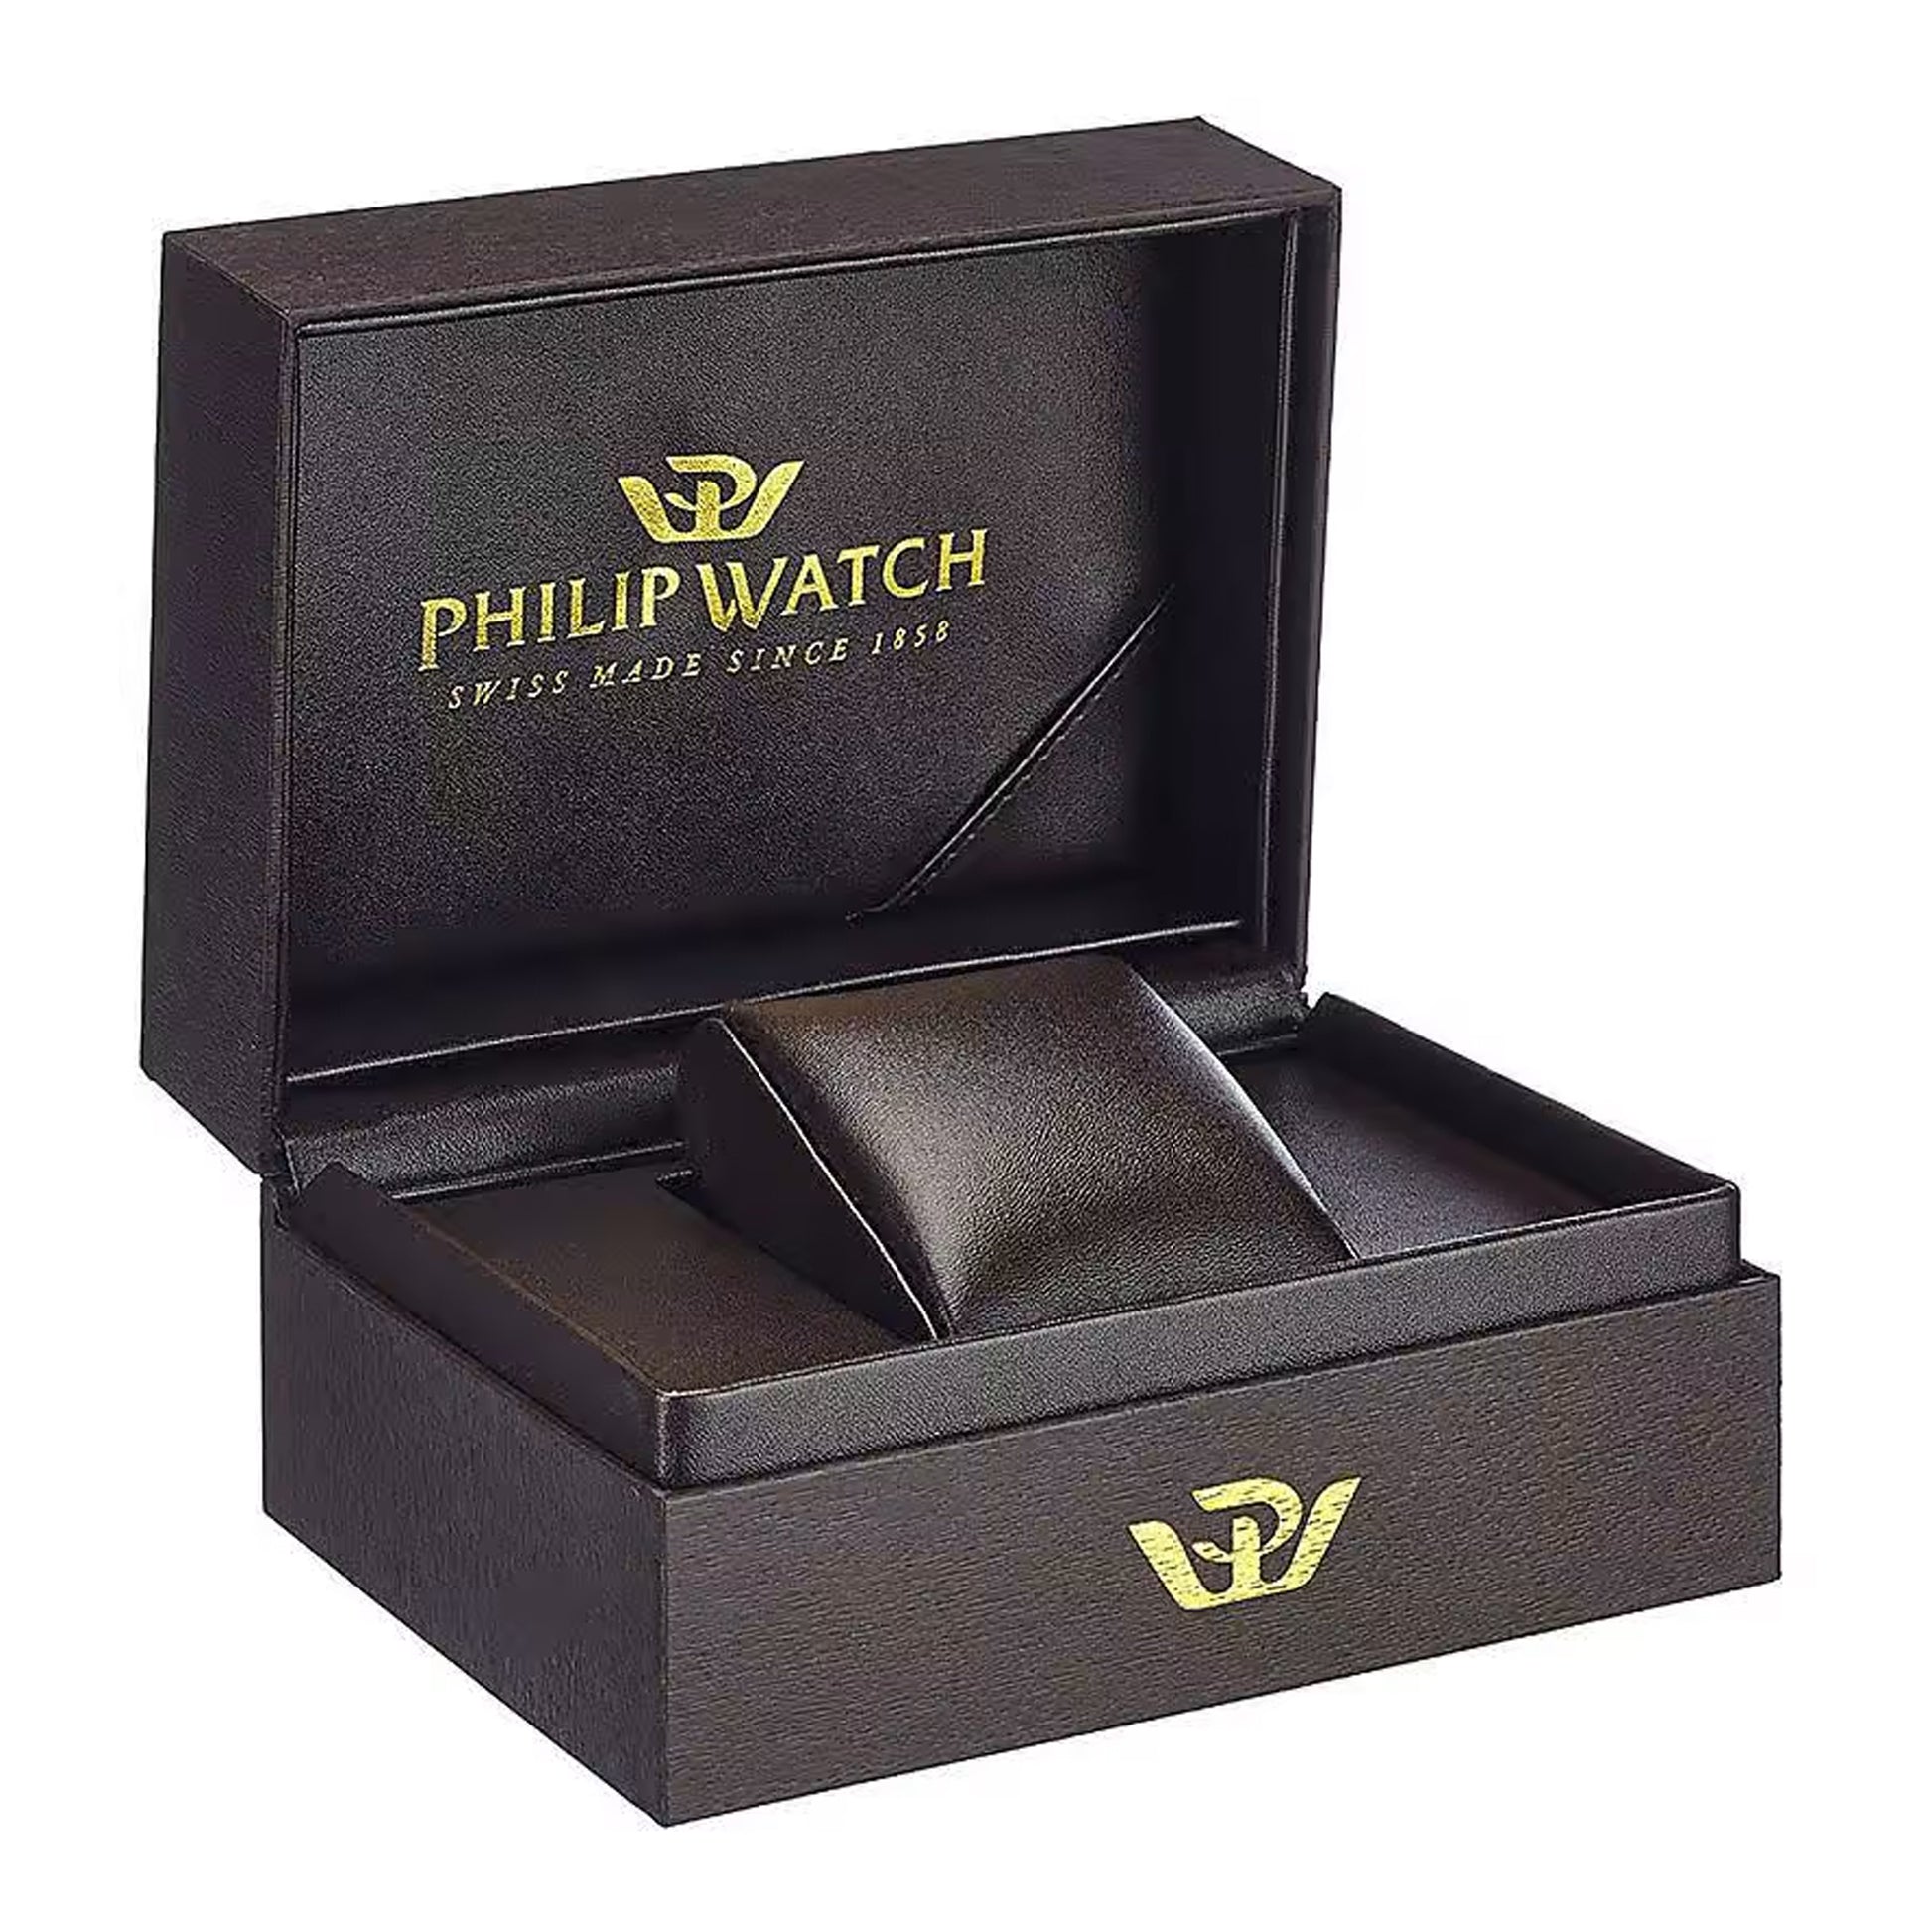 Philip Watch Sunray 3h auto-date silver